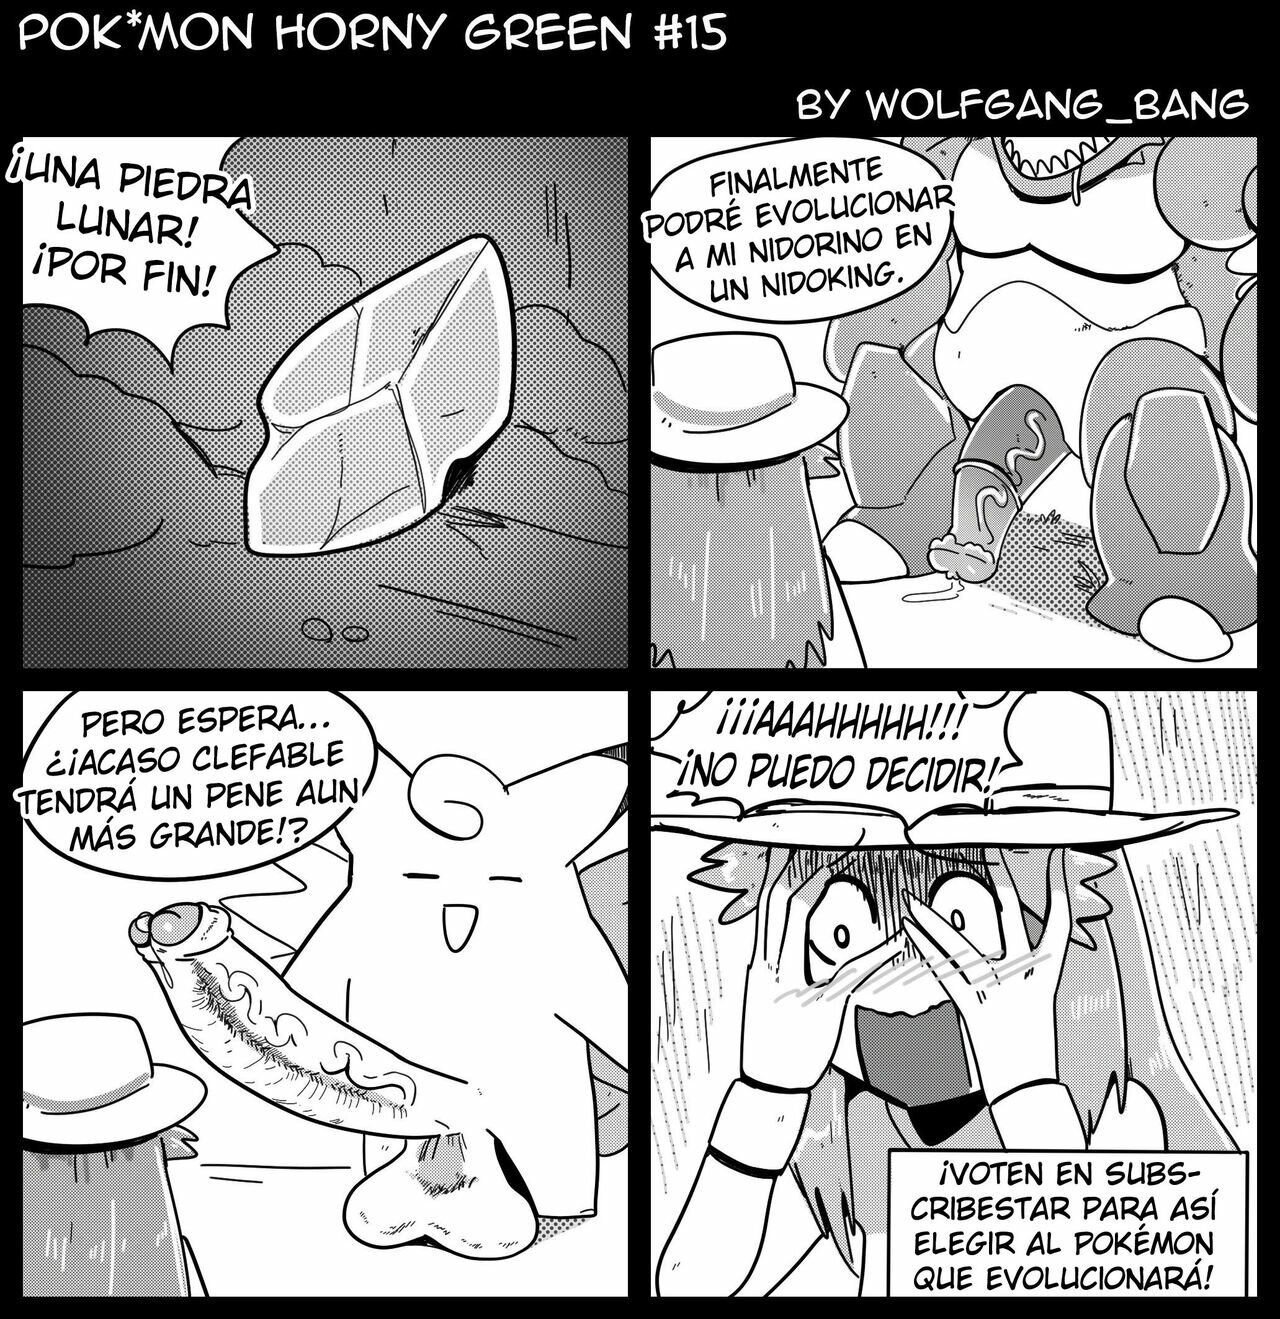 Pokemon HornyGreen by Wolfrad Senpai - 15